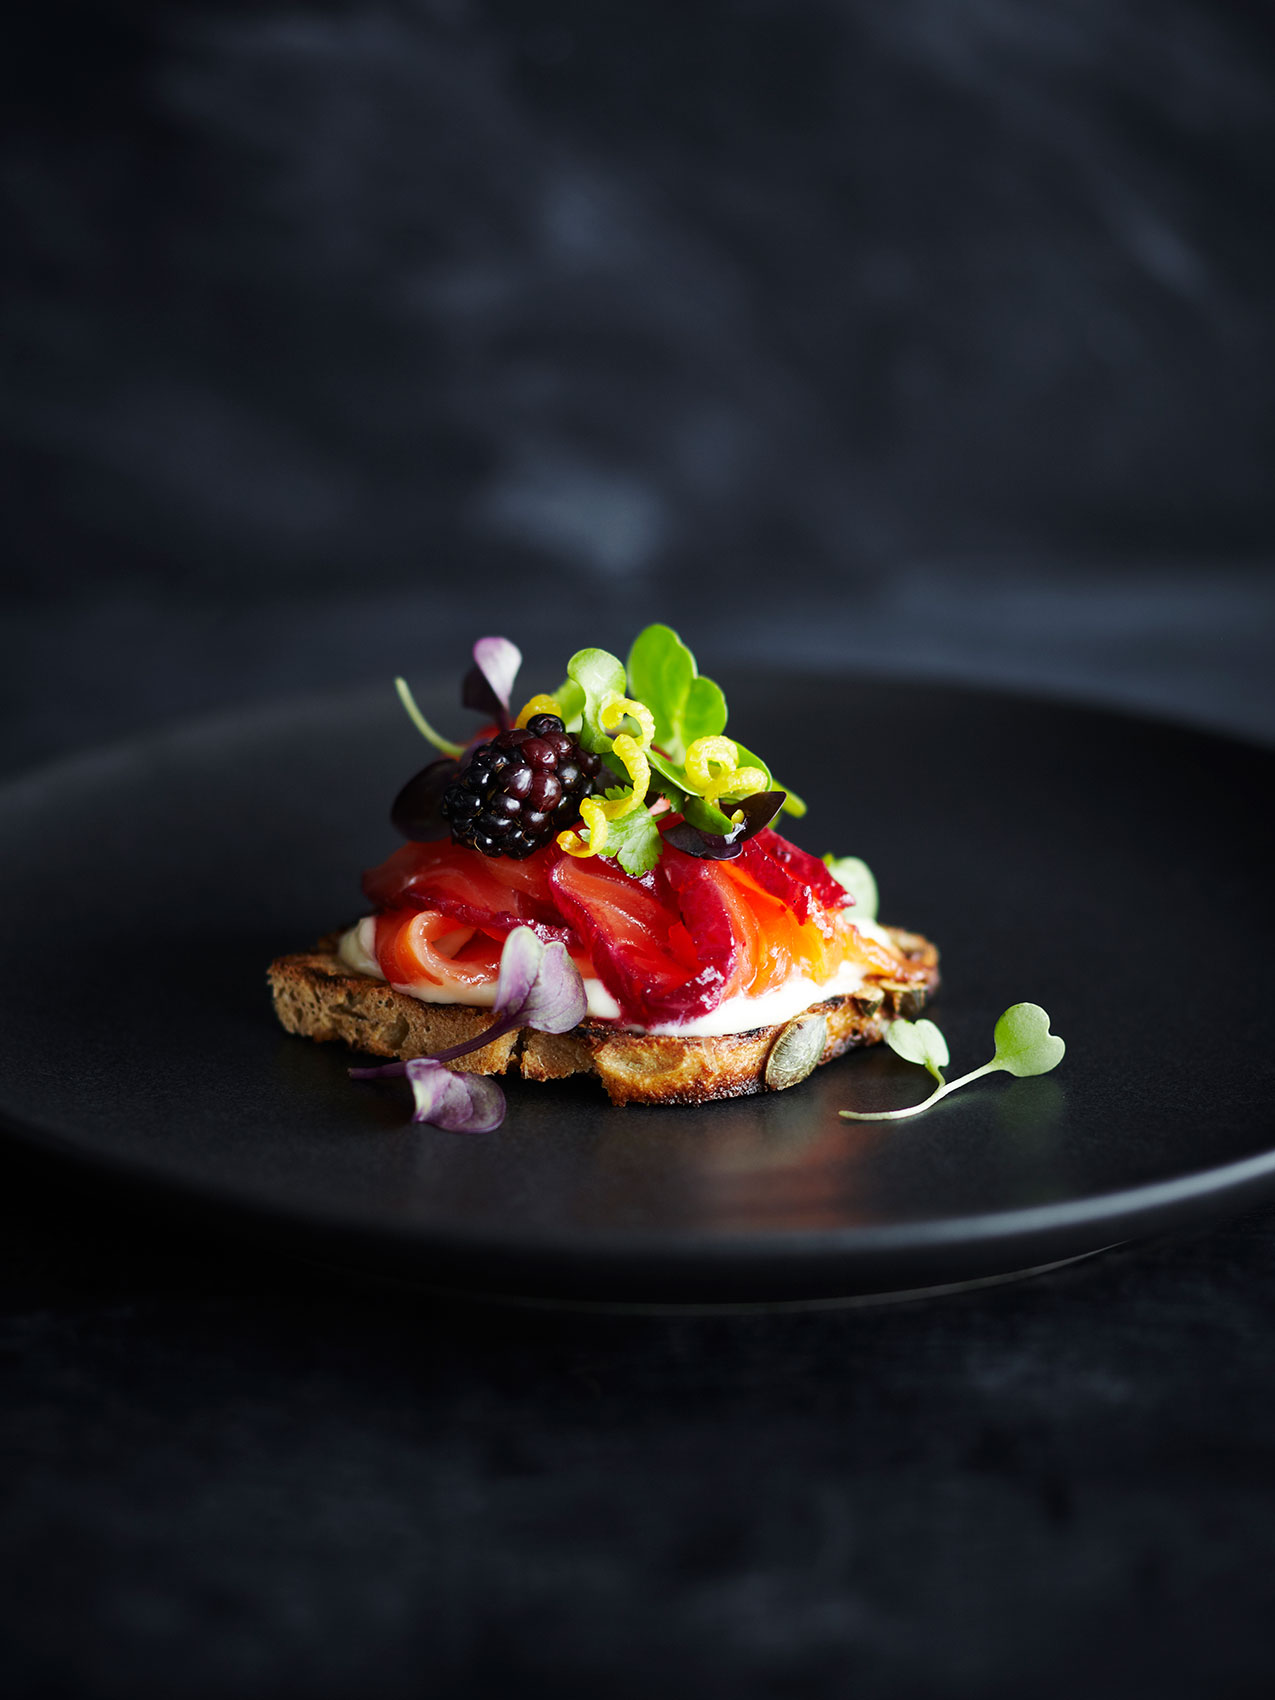 Laesoe Salt • Salt Gravlax Smørrebrød with Fresh Greens & Boysenberry • Advertising & Lifestyle Food Photography